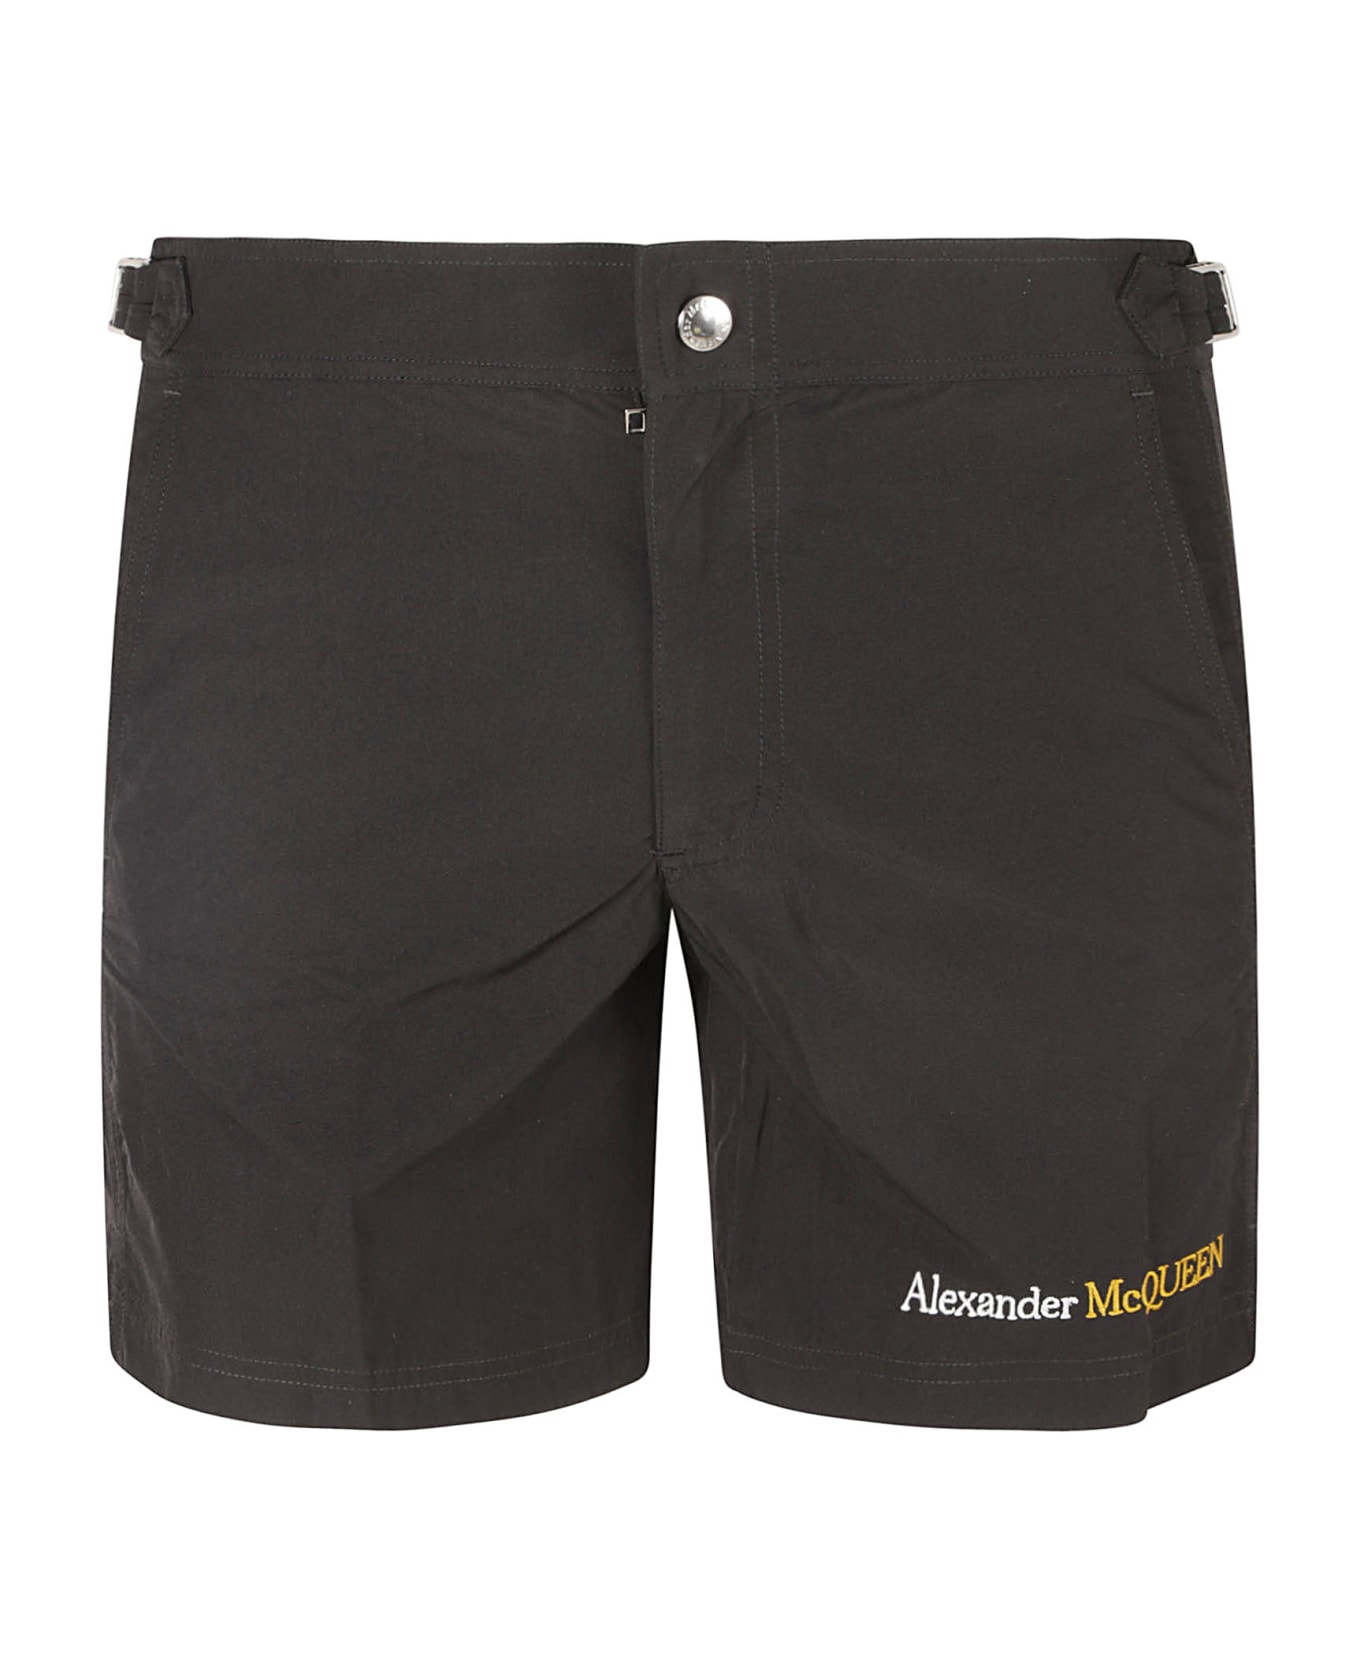 Alexander McQueen Swimming Shorts - Black/Gold ショートパンツ